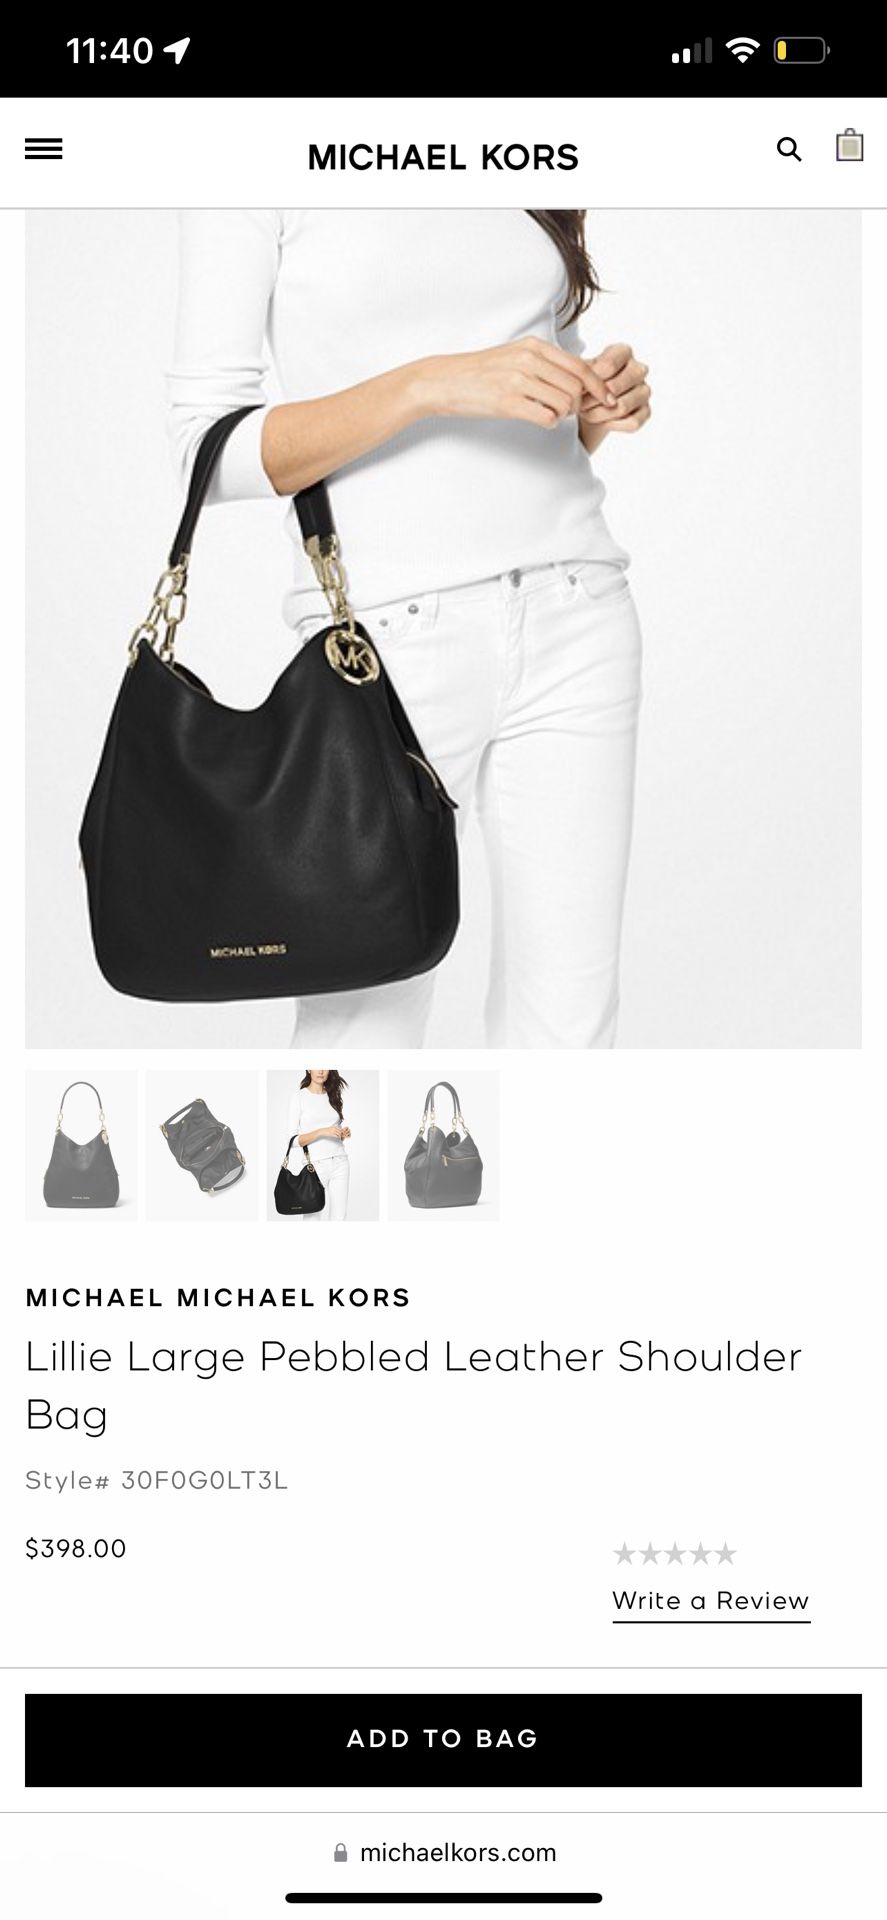 Michael Kors Charlotte Top Zip Tote MK Signature Shoulder Bag Purse Pink-  New for Sale in Belle Isle, FL - OfferUp